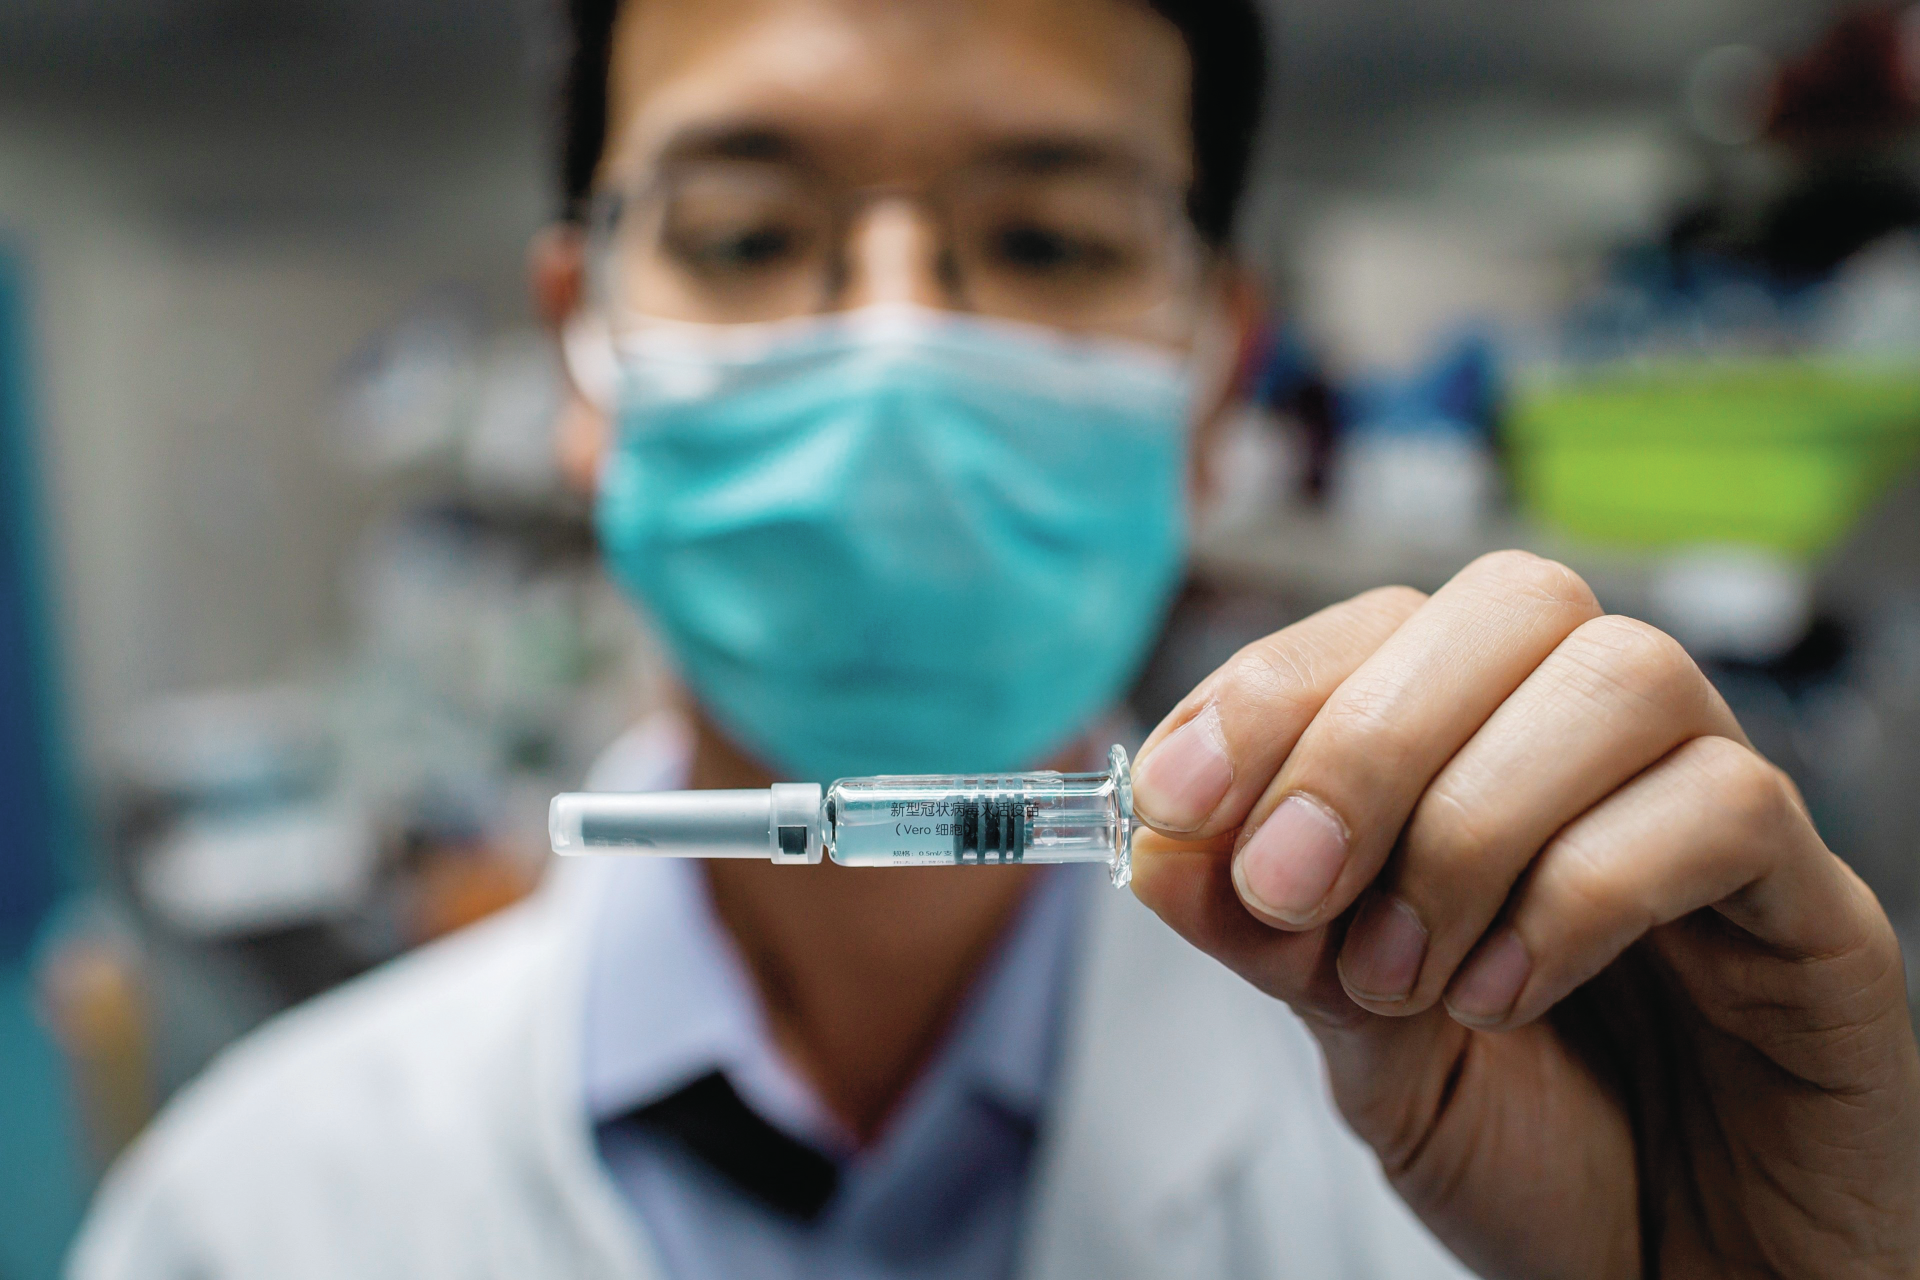 Levantamento de patente de vacinas salvaria milhões de vidas